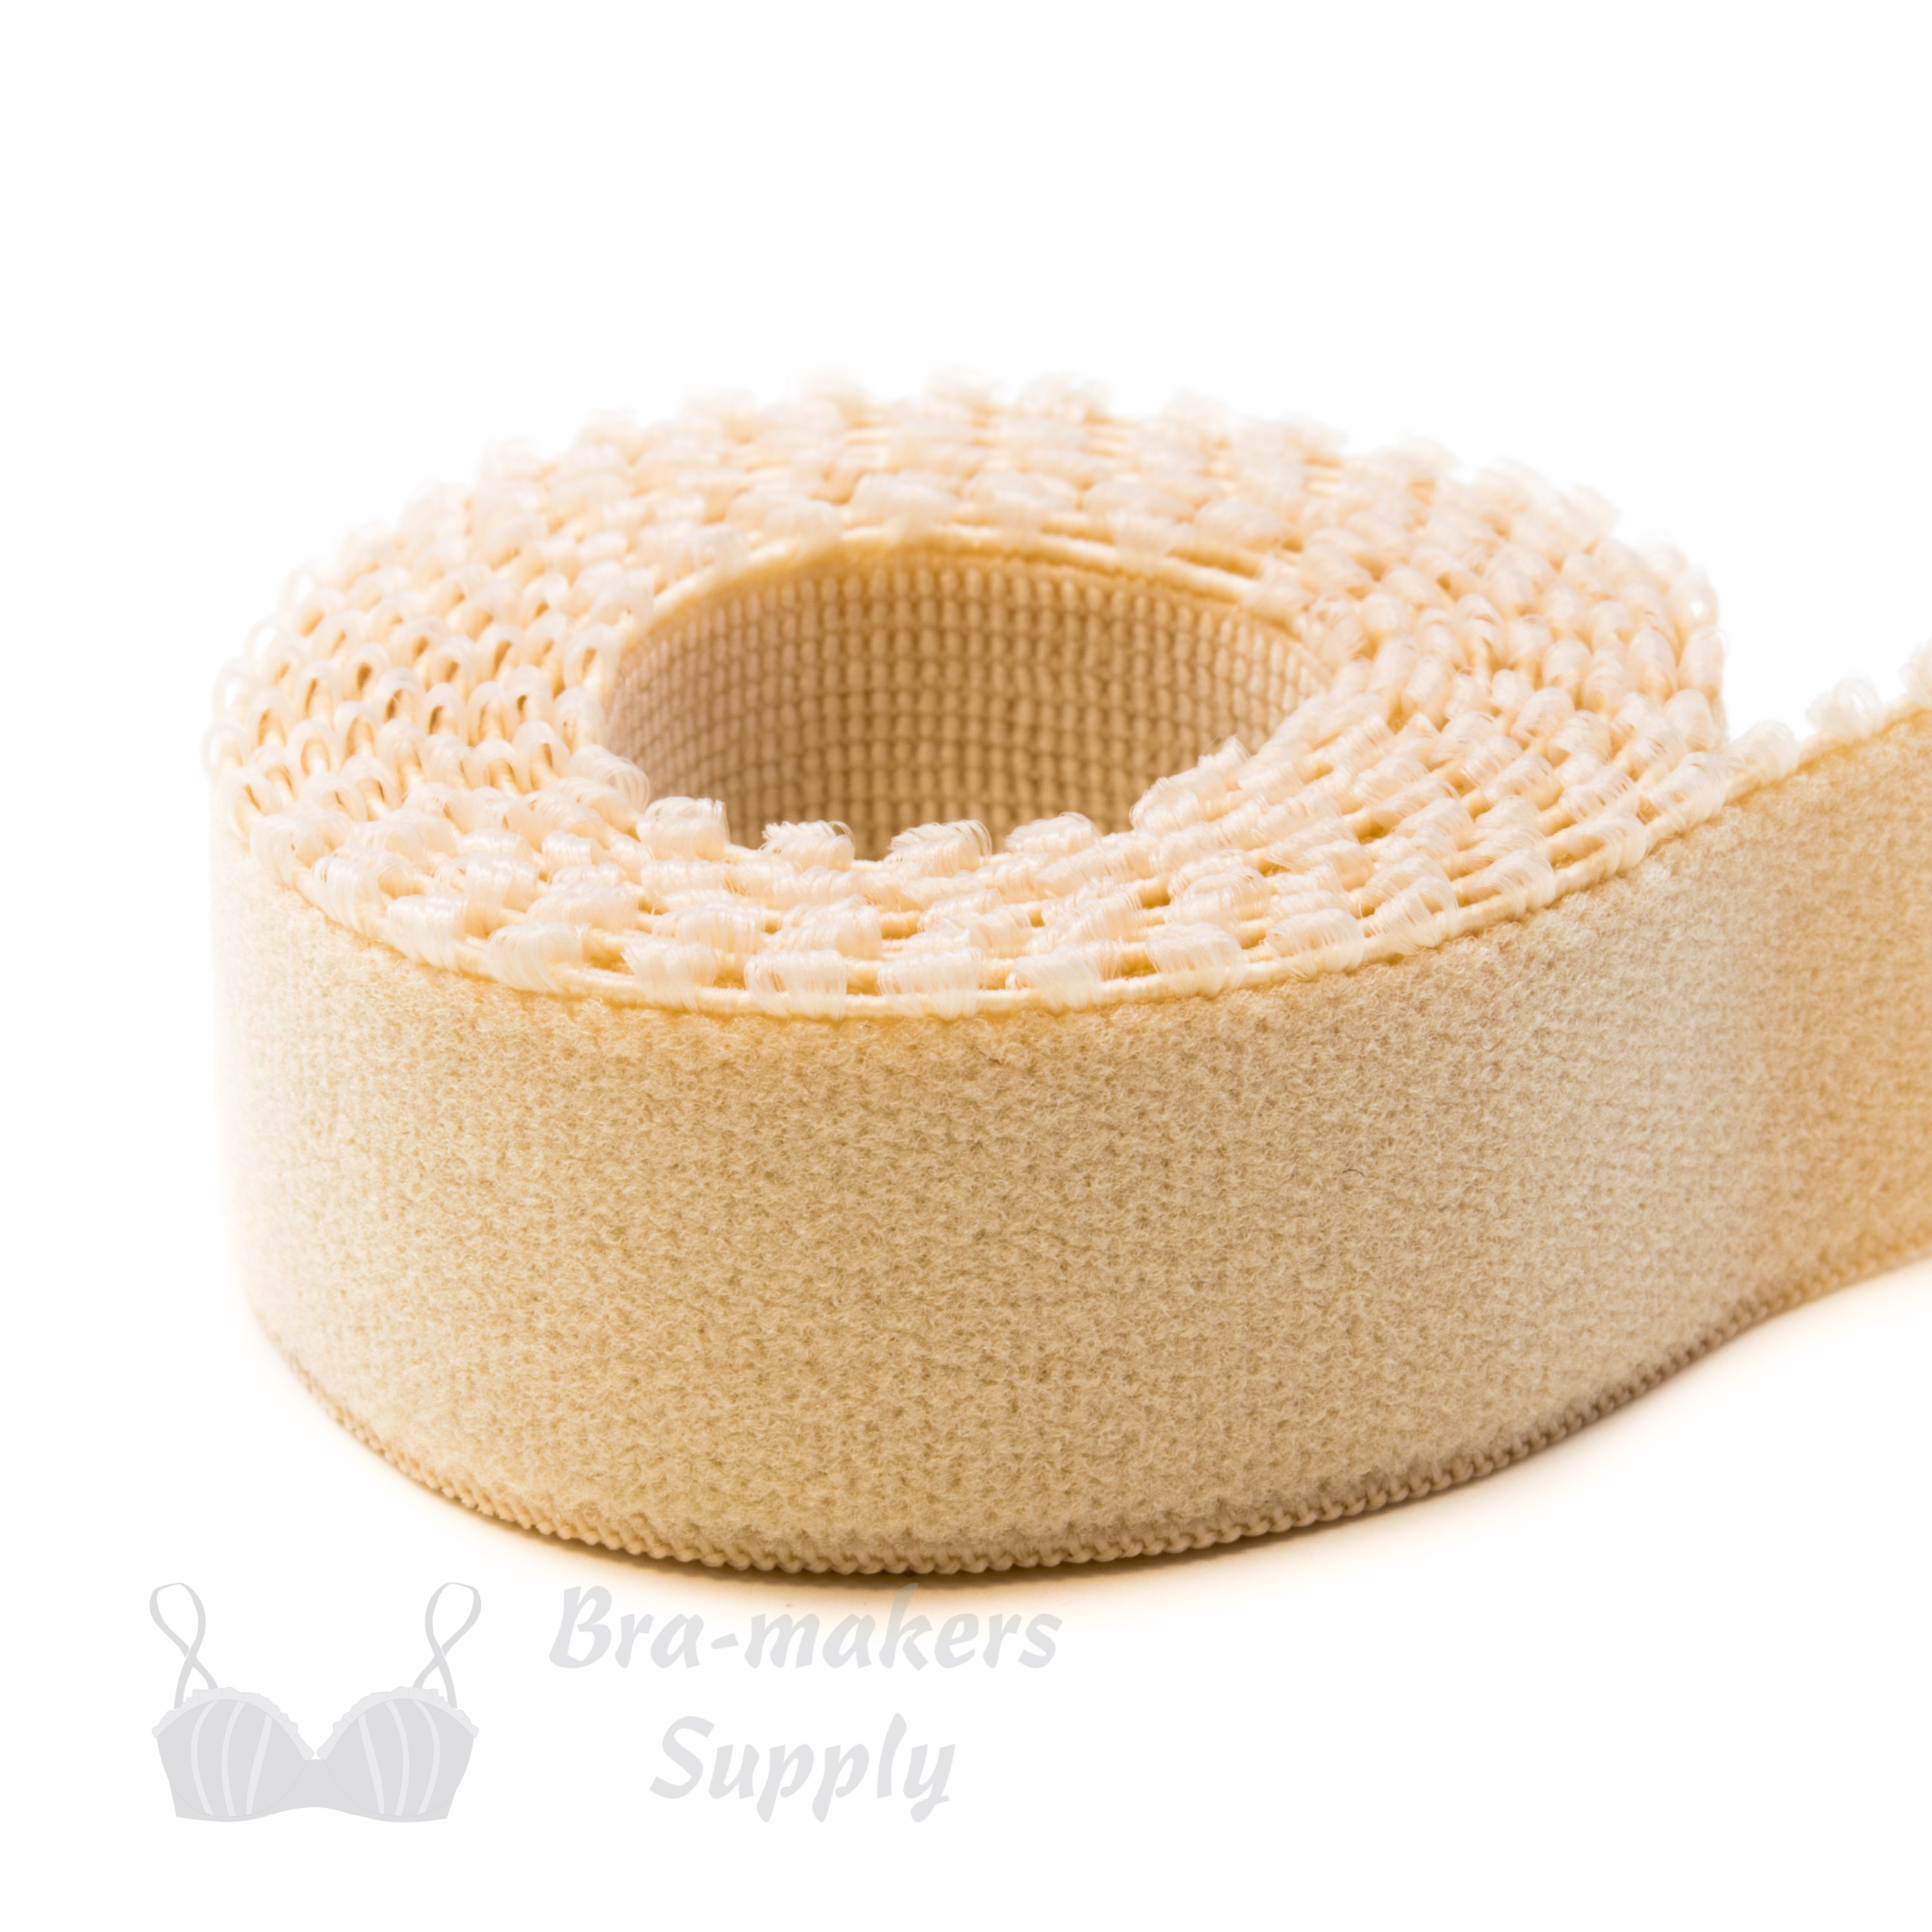 three quarters inch soft plush back elastic EB-67 beige or 19mm bra band elastic Pantone 14-1212 frappe from Bra-Makers Supply 1 metre roll shown